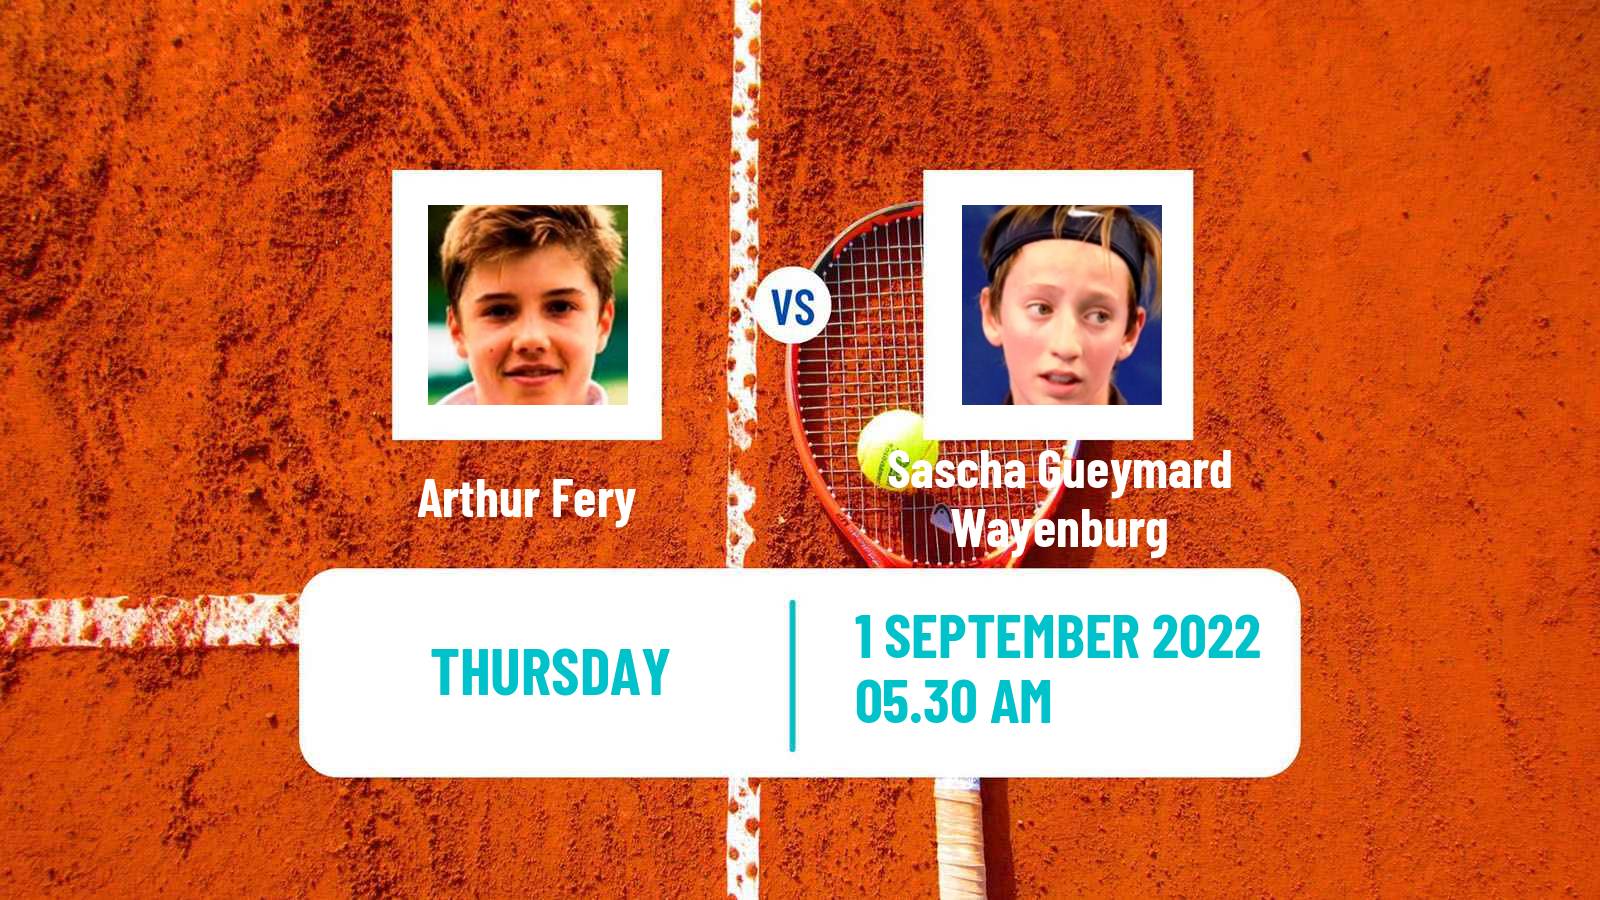 Tennis ITF Tournaments Arthur Fery - Sascha Gueymard Wayenburg